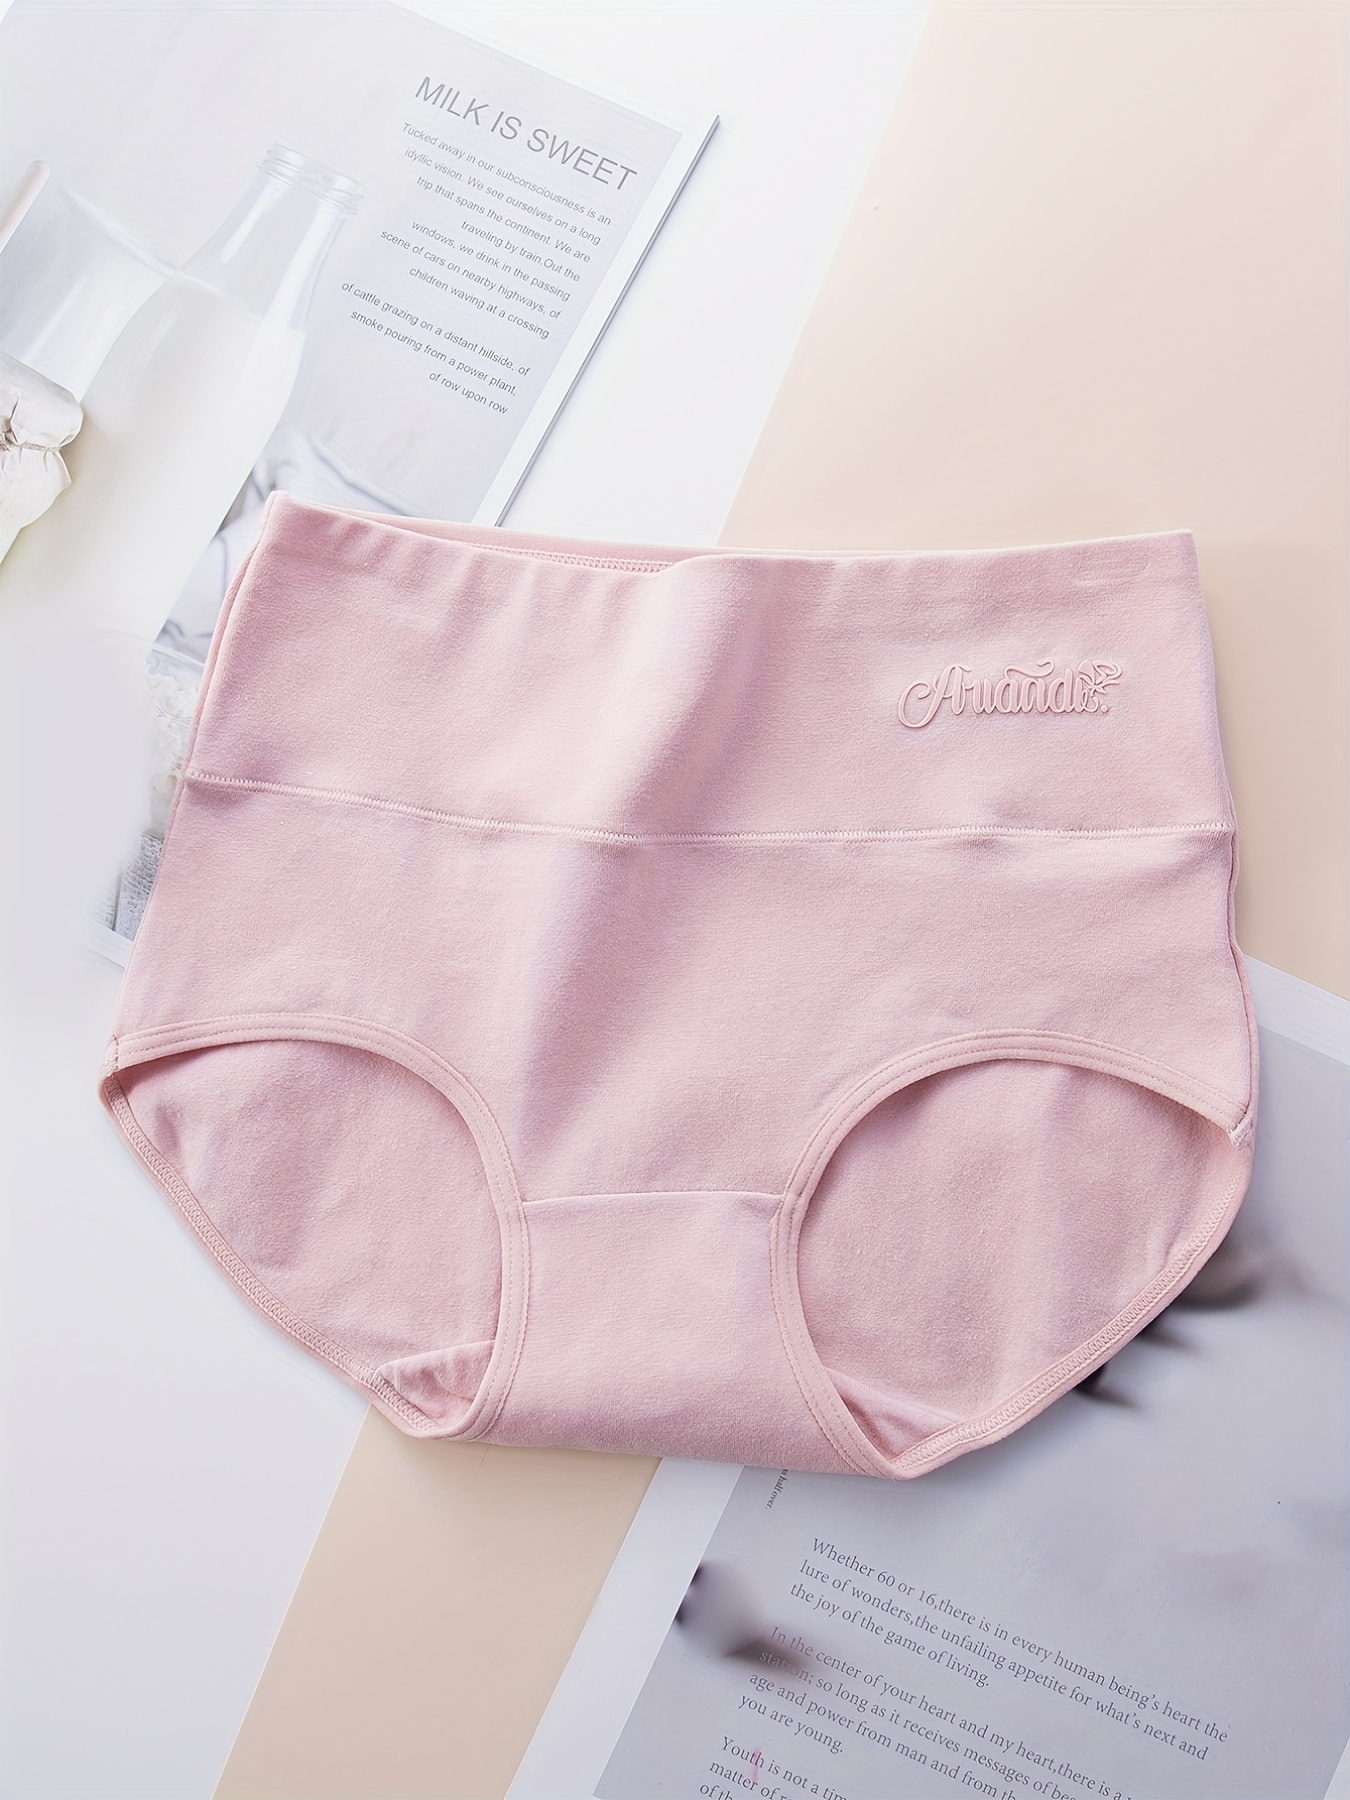 Comfortable Cotton Underwear for Women - Middle Waist Sweet